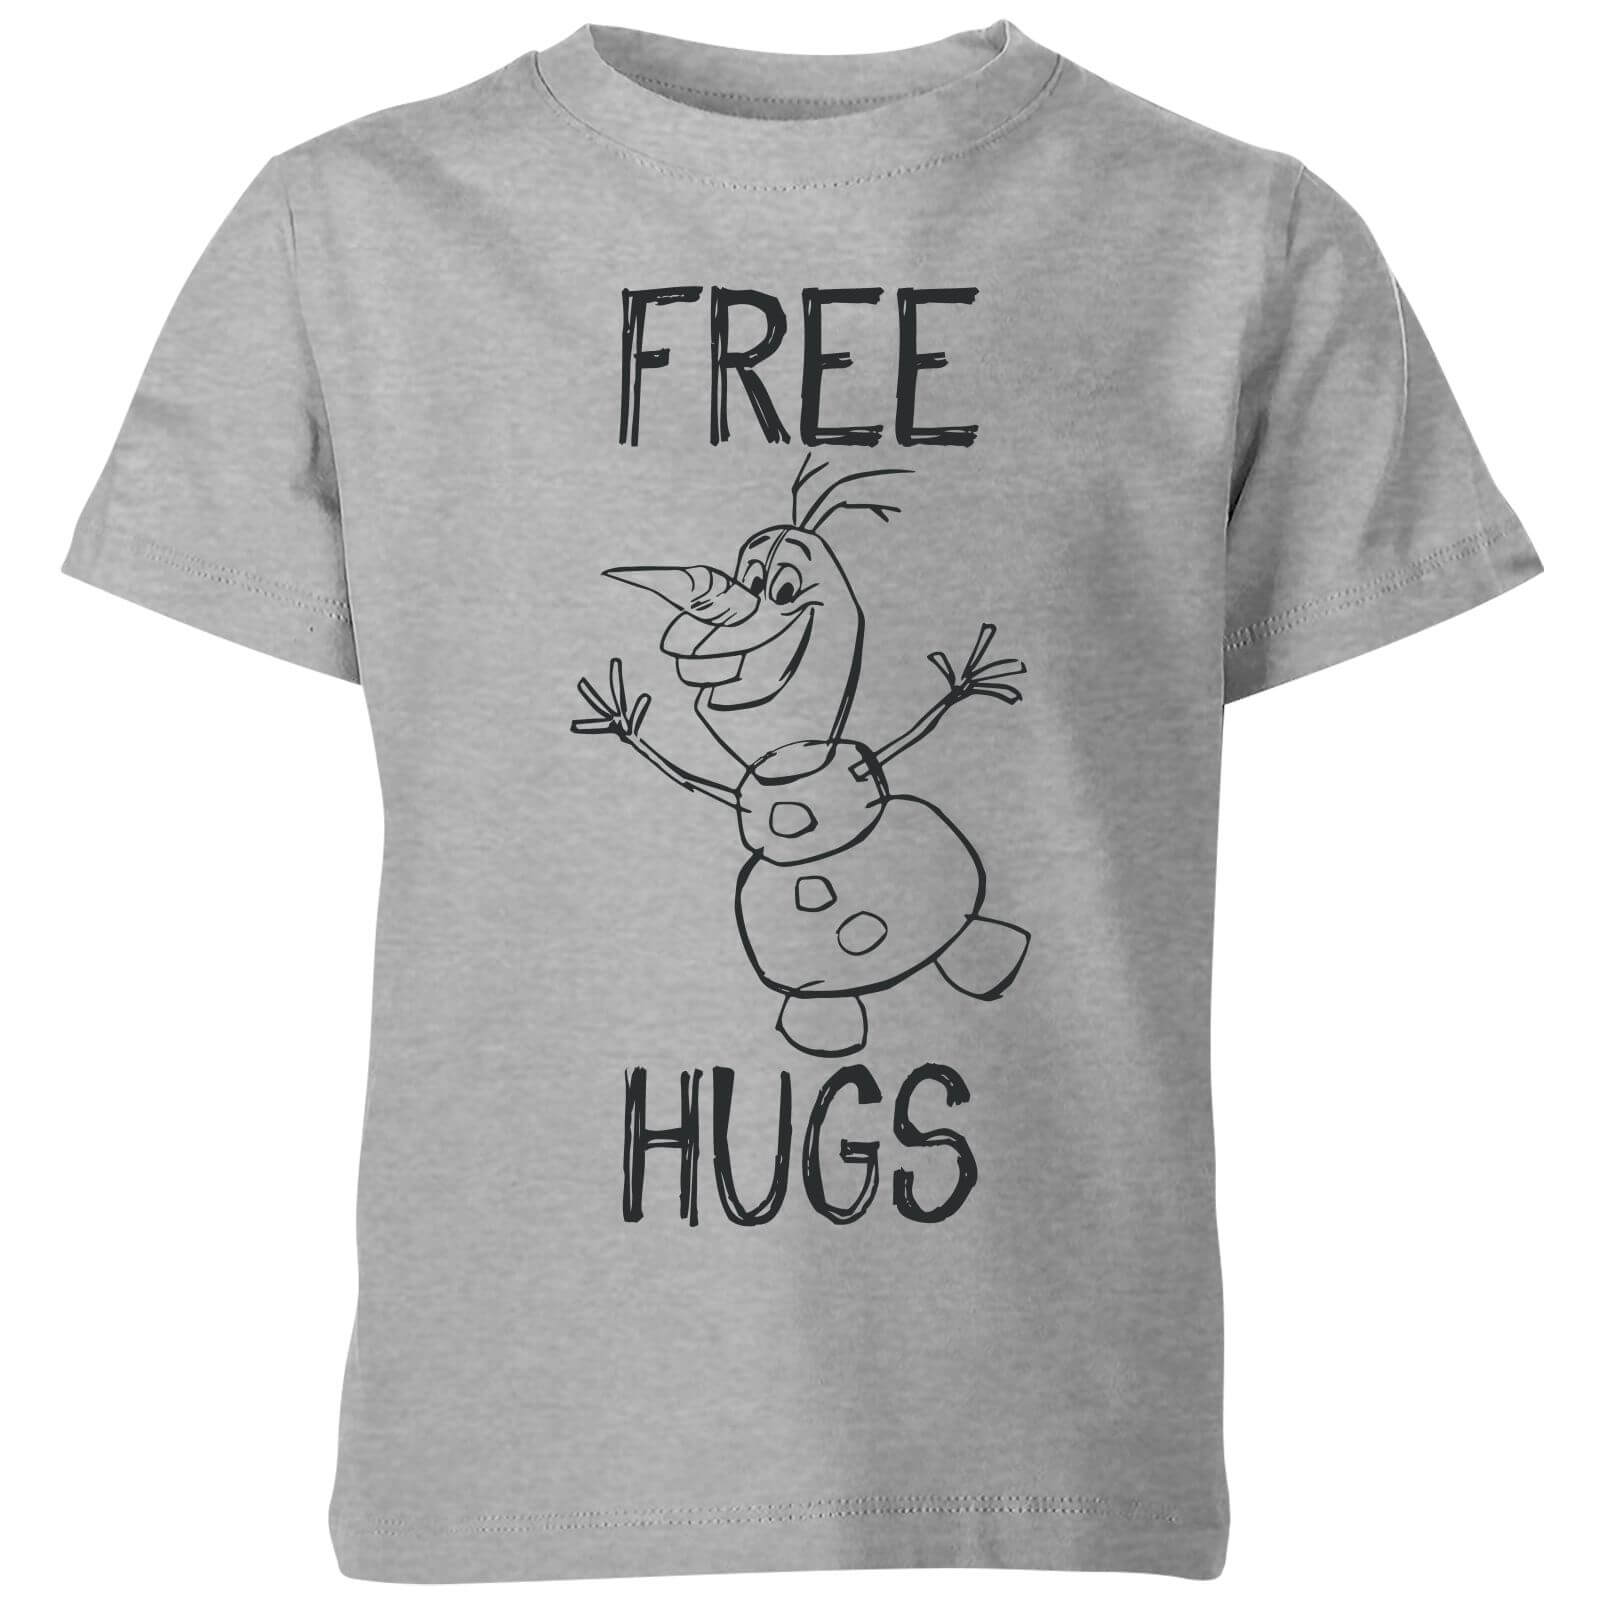 Disney Frozen Olaf Free Hugs Kids' T-Shirt - Grey - 9-10 Years